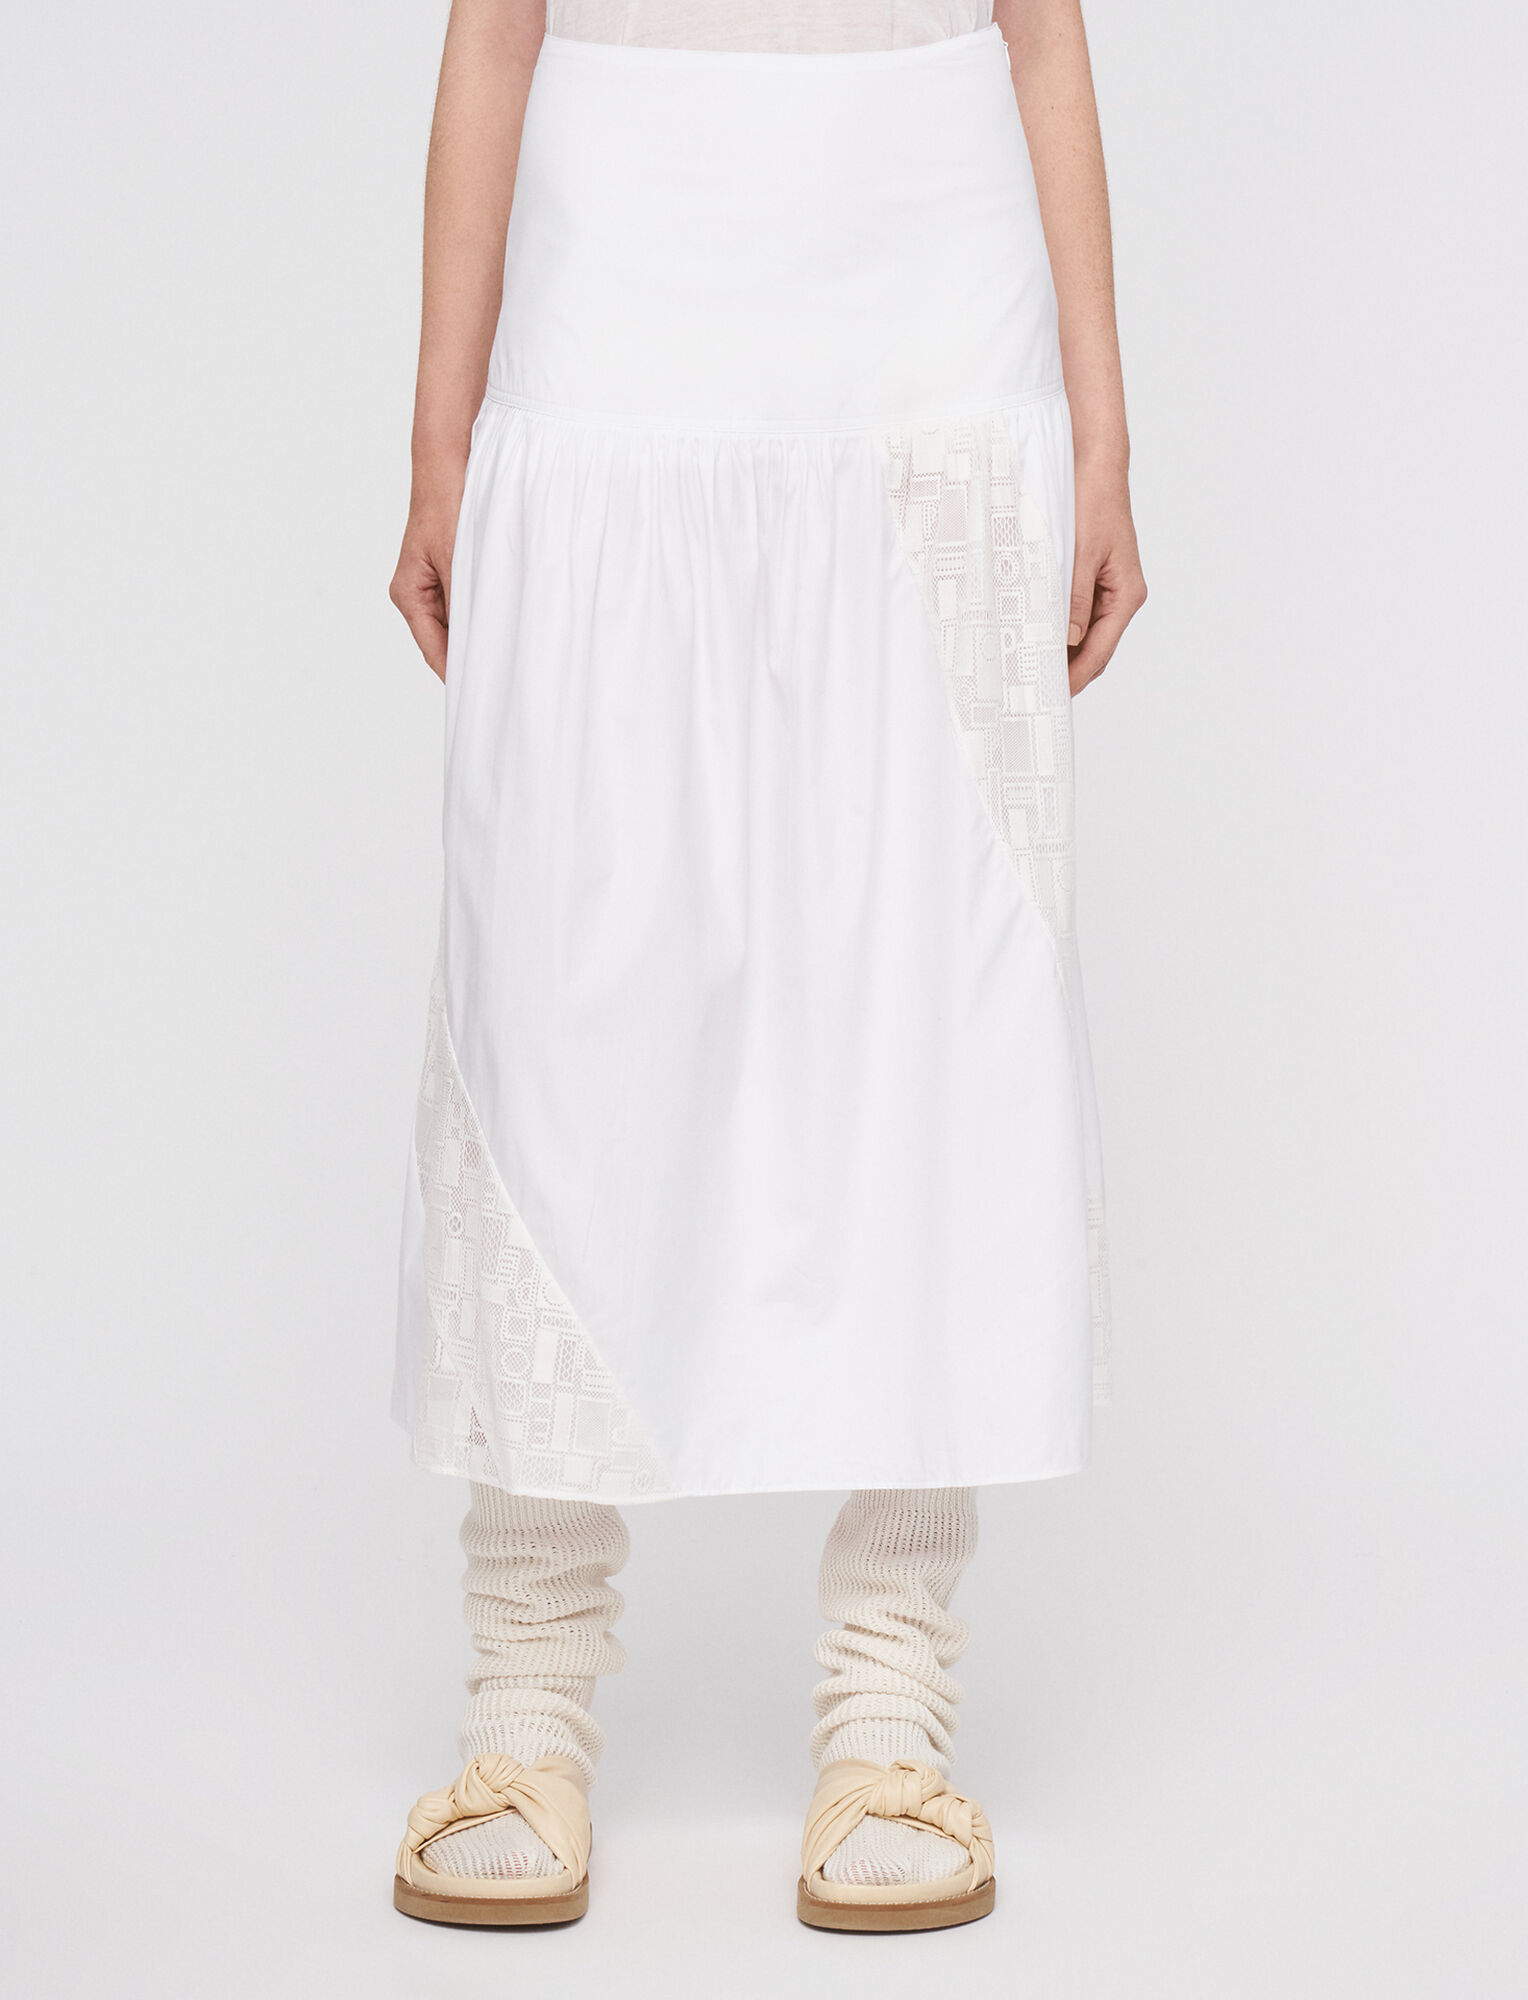 Joseph, Mix Animation Samina Skirt, in White combo